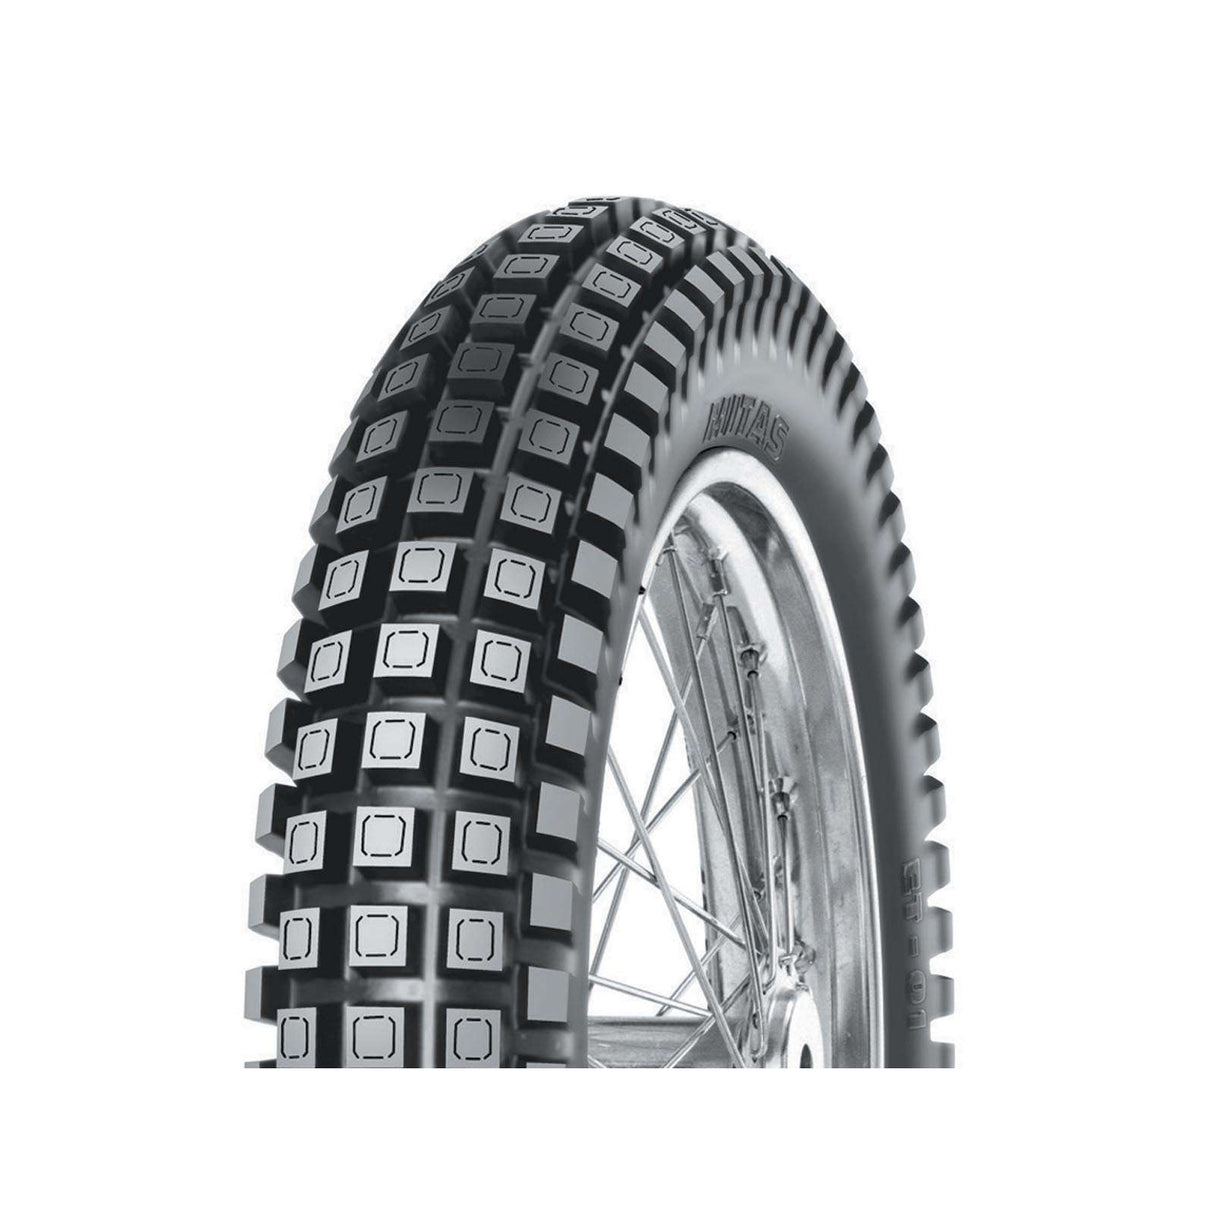 2.75-21 ET01 Trials Mitas Enduro Front Tyre